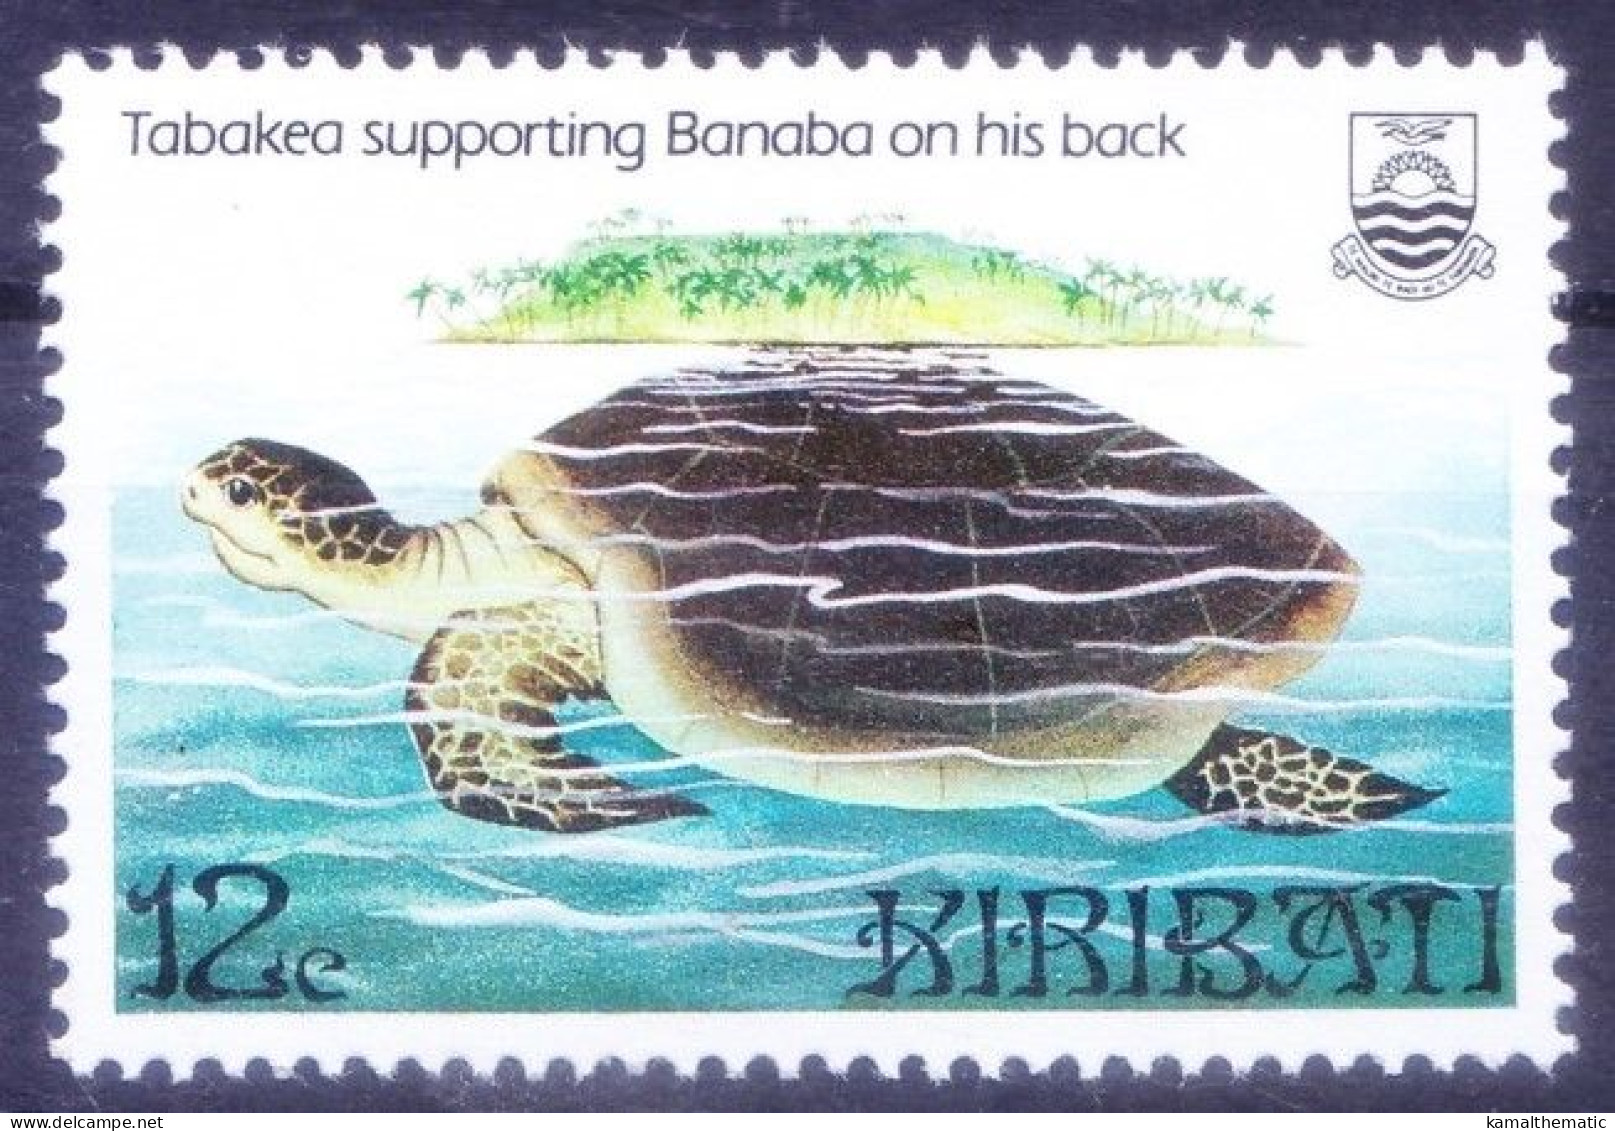 Kiribati 1984 MNH, Tabakea The Turtle God, Supporting Banaba Island On Back. - Tortues